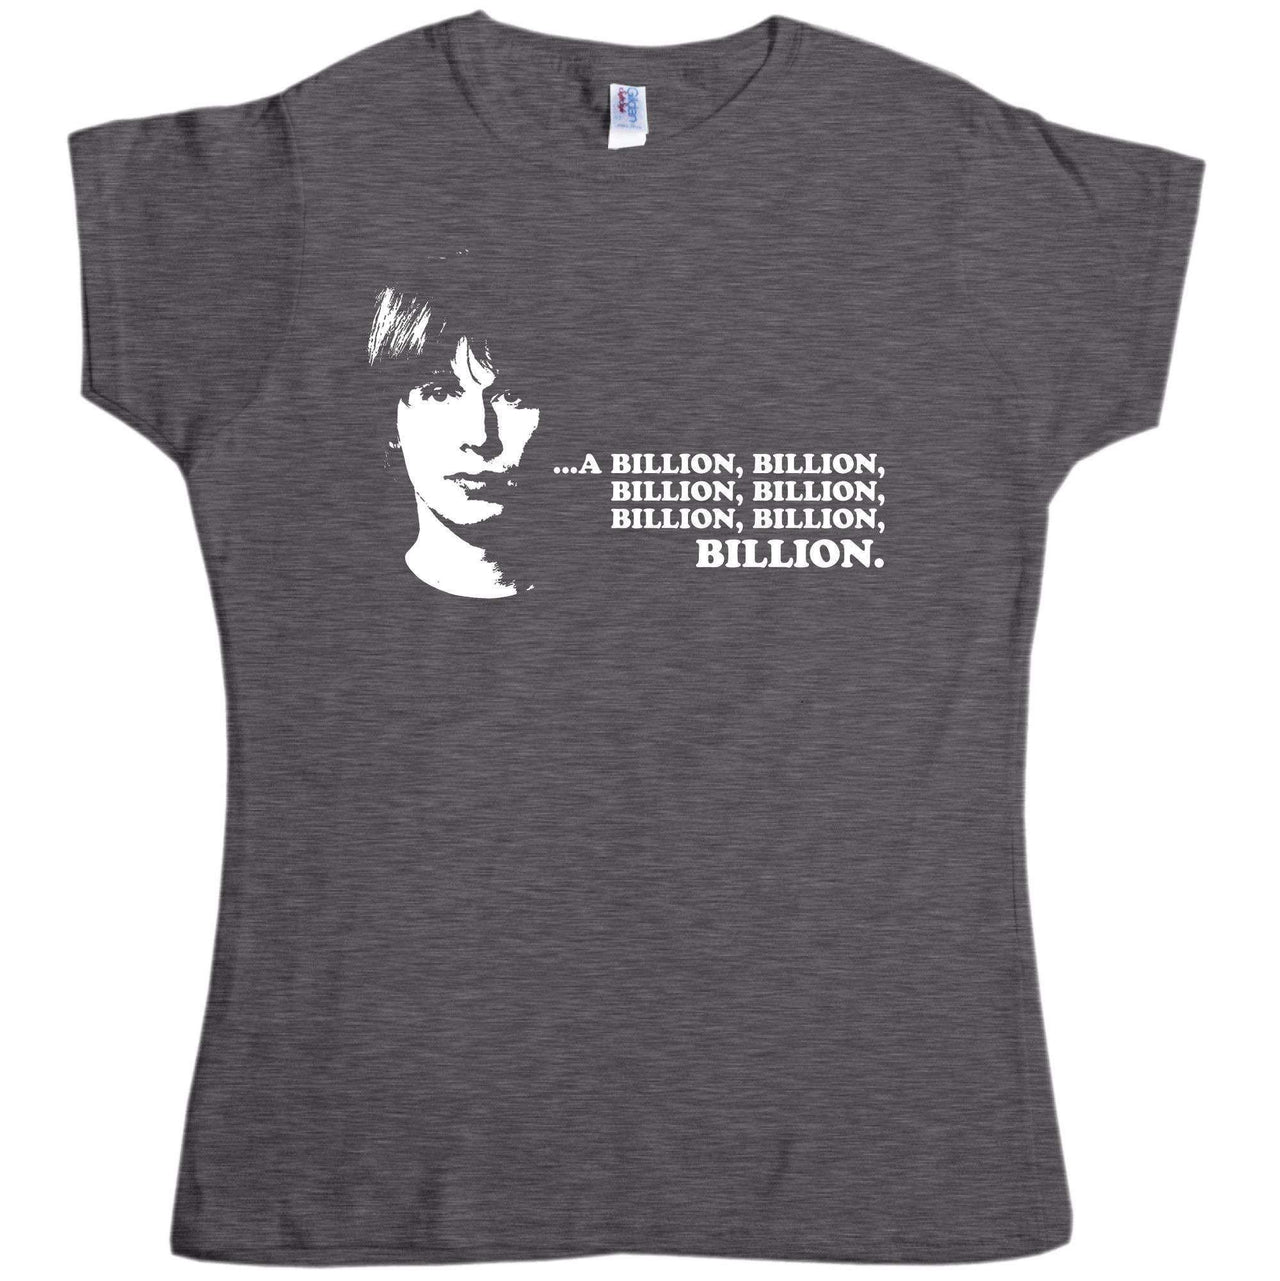 Billion Billion Billion Womens T-Shirt, Inspired By Brian Cox 8Ball